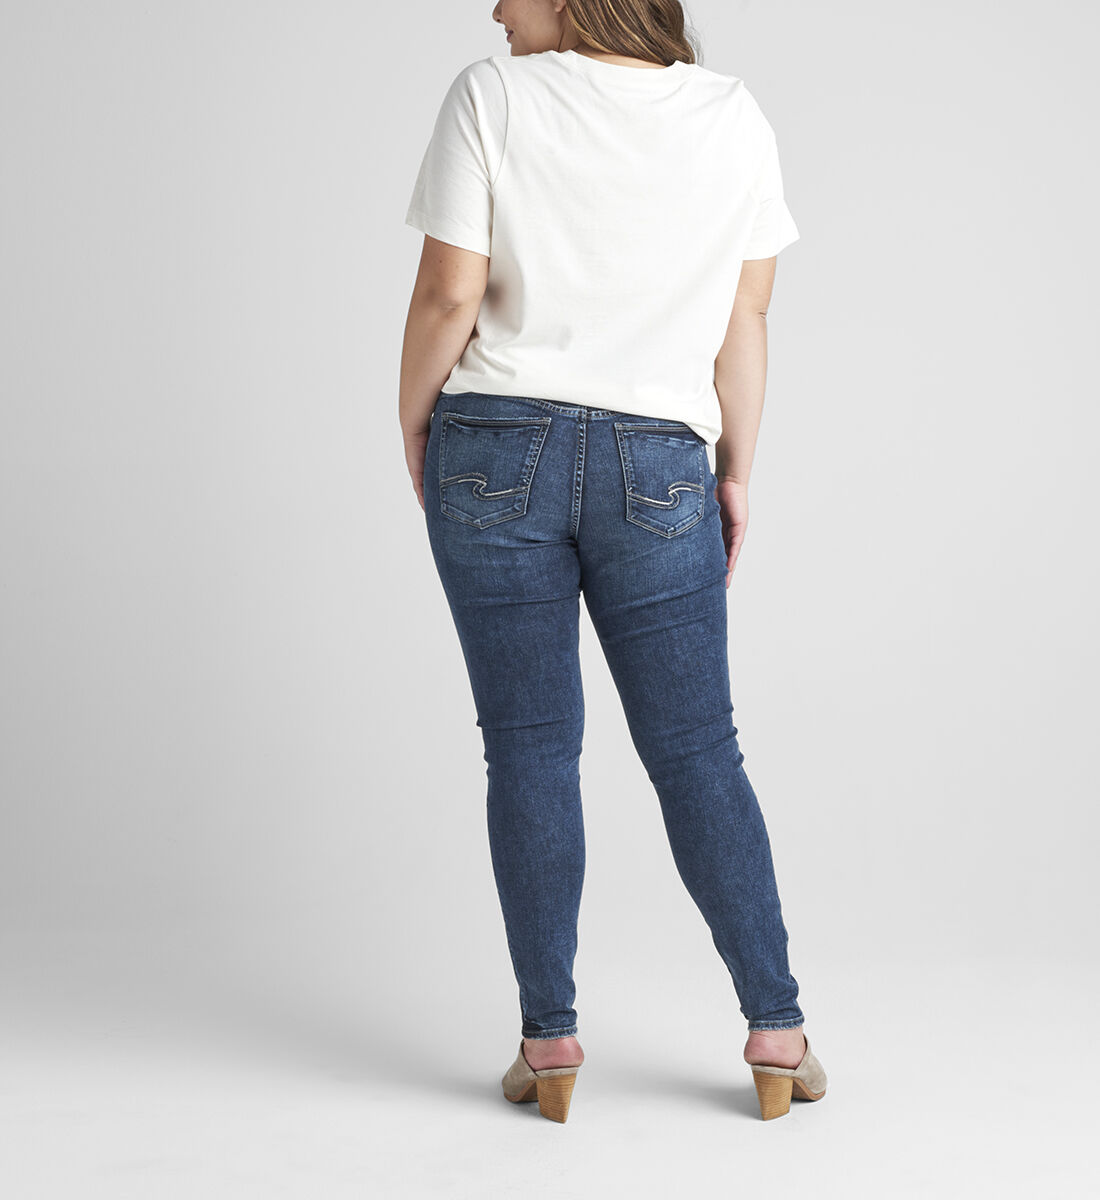 Elyse Mid Rise Skinny Jeans Plus Size Back